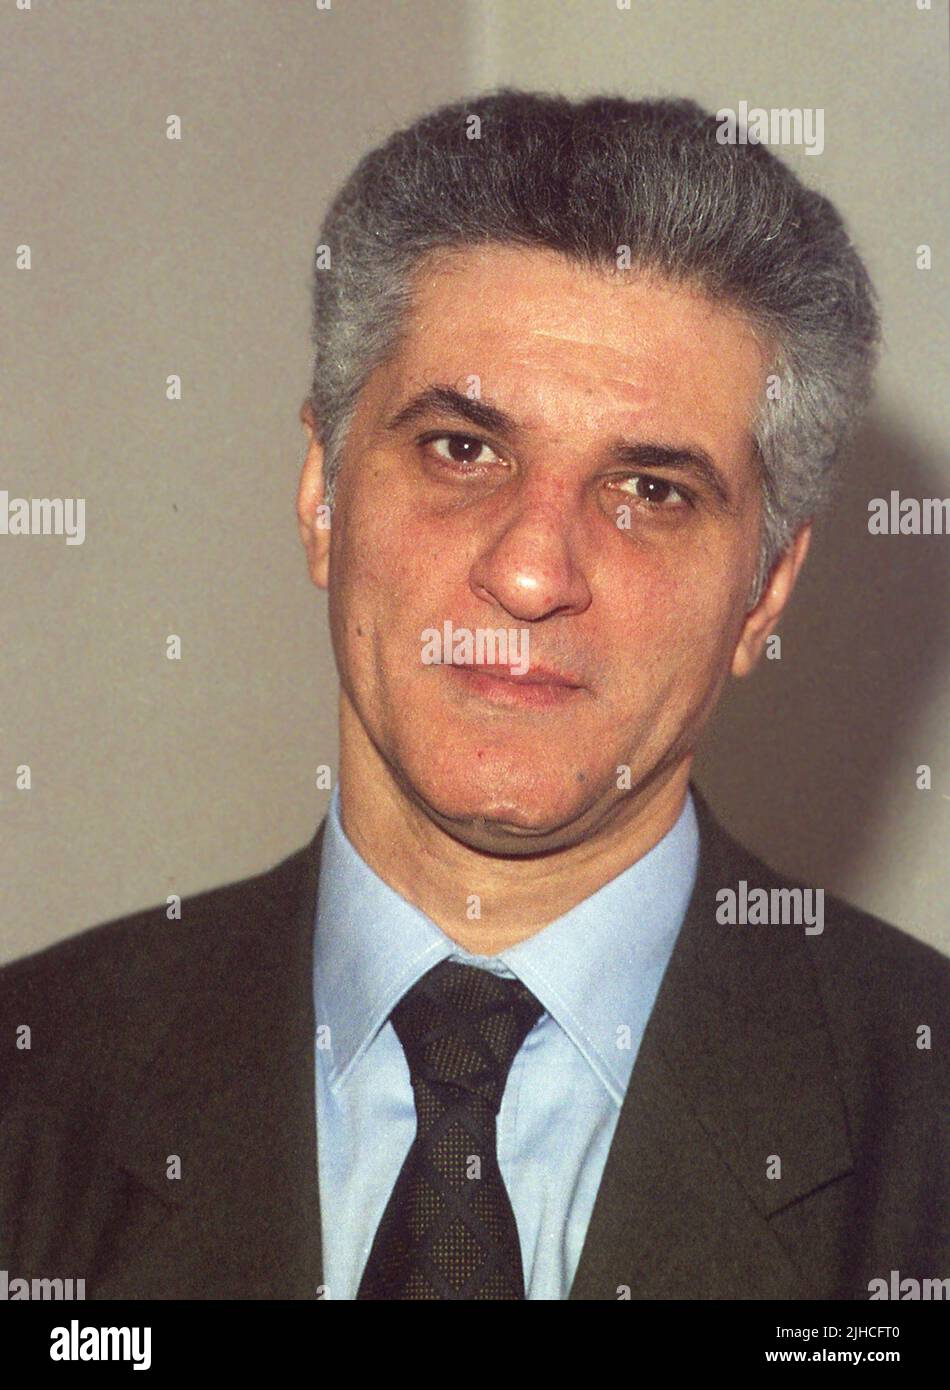 Romanian businessman and mayor George Pădure, approx. 1995 Stock Photo